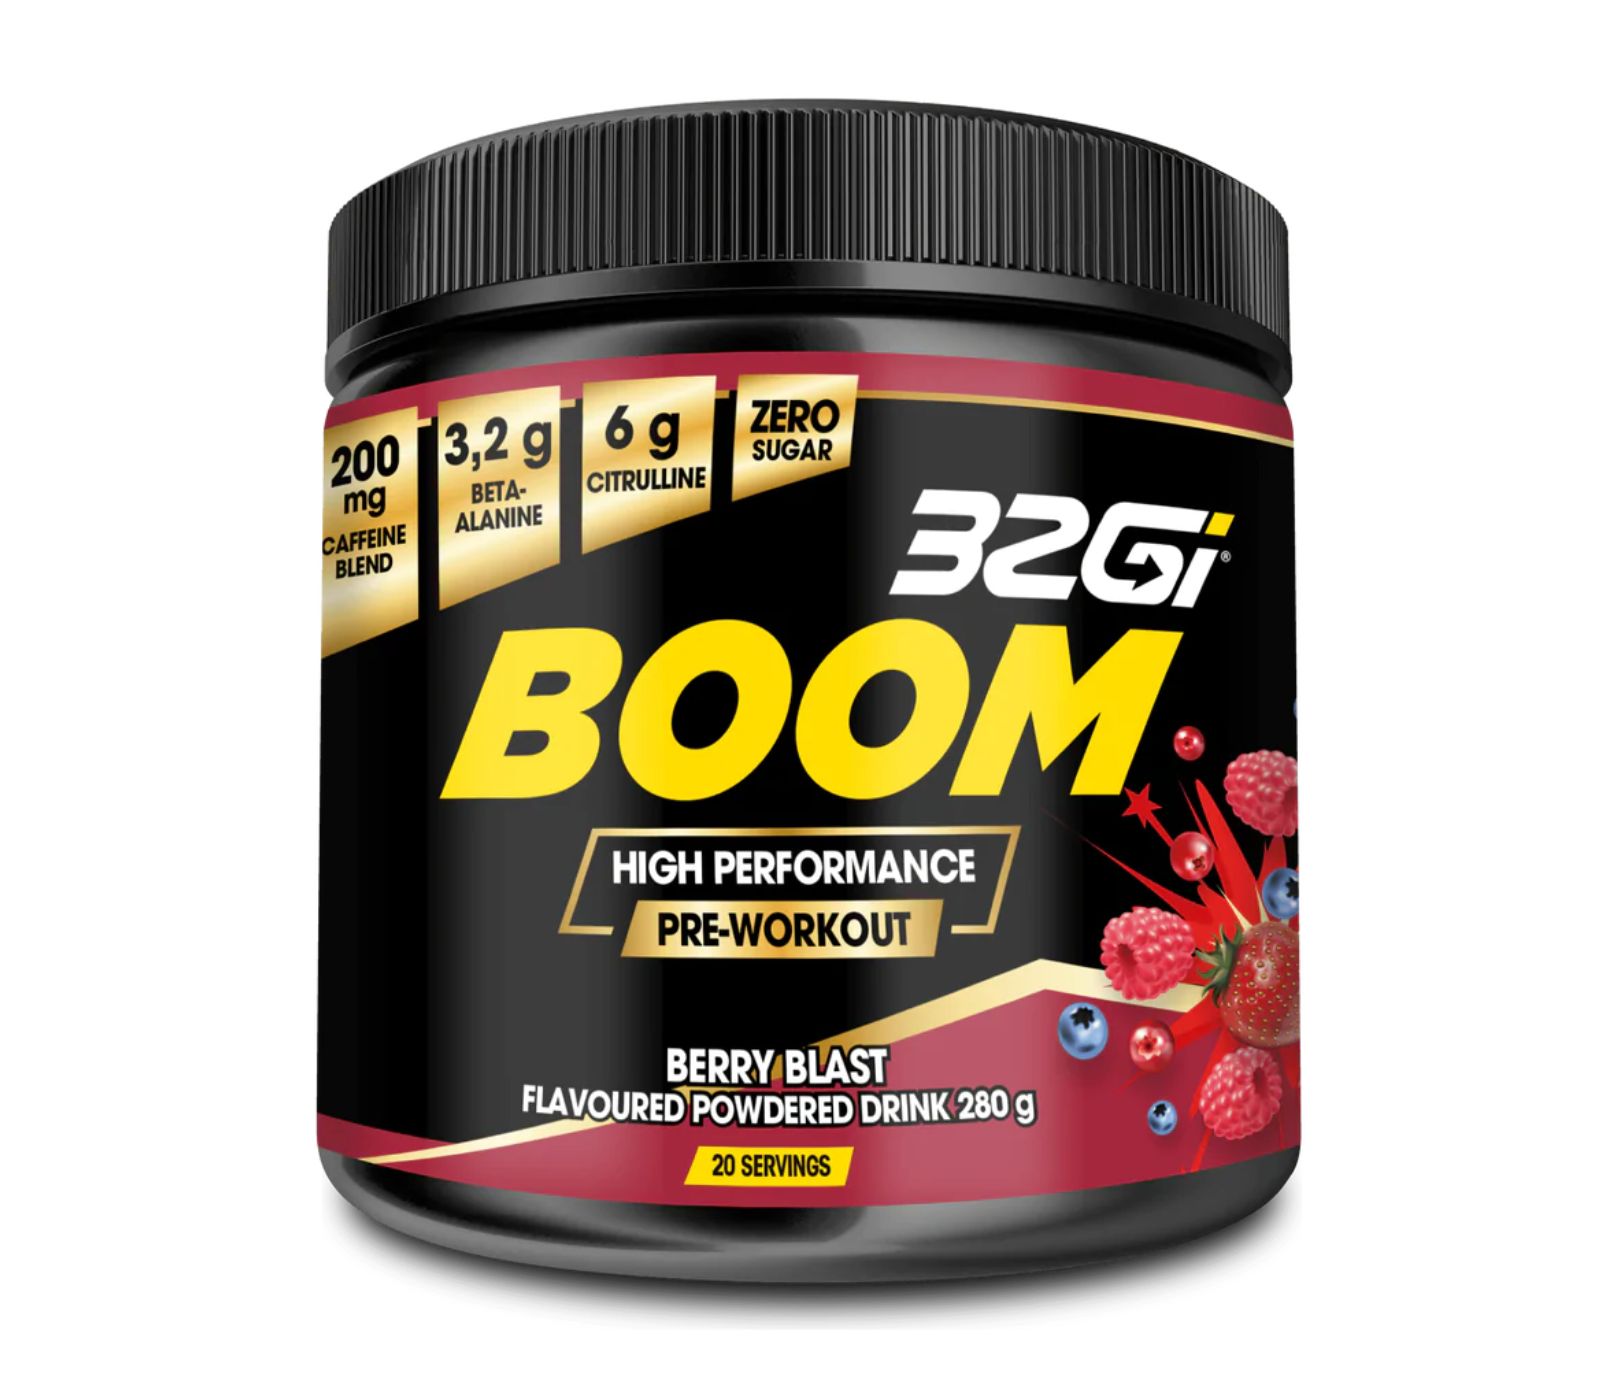 32GI Boom Pre-Workout Berry Blast 280G Tub